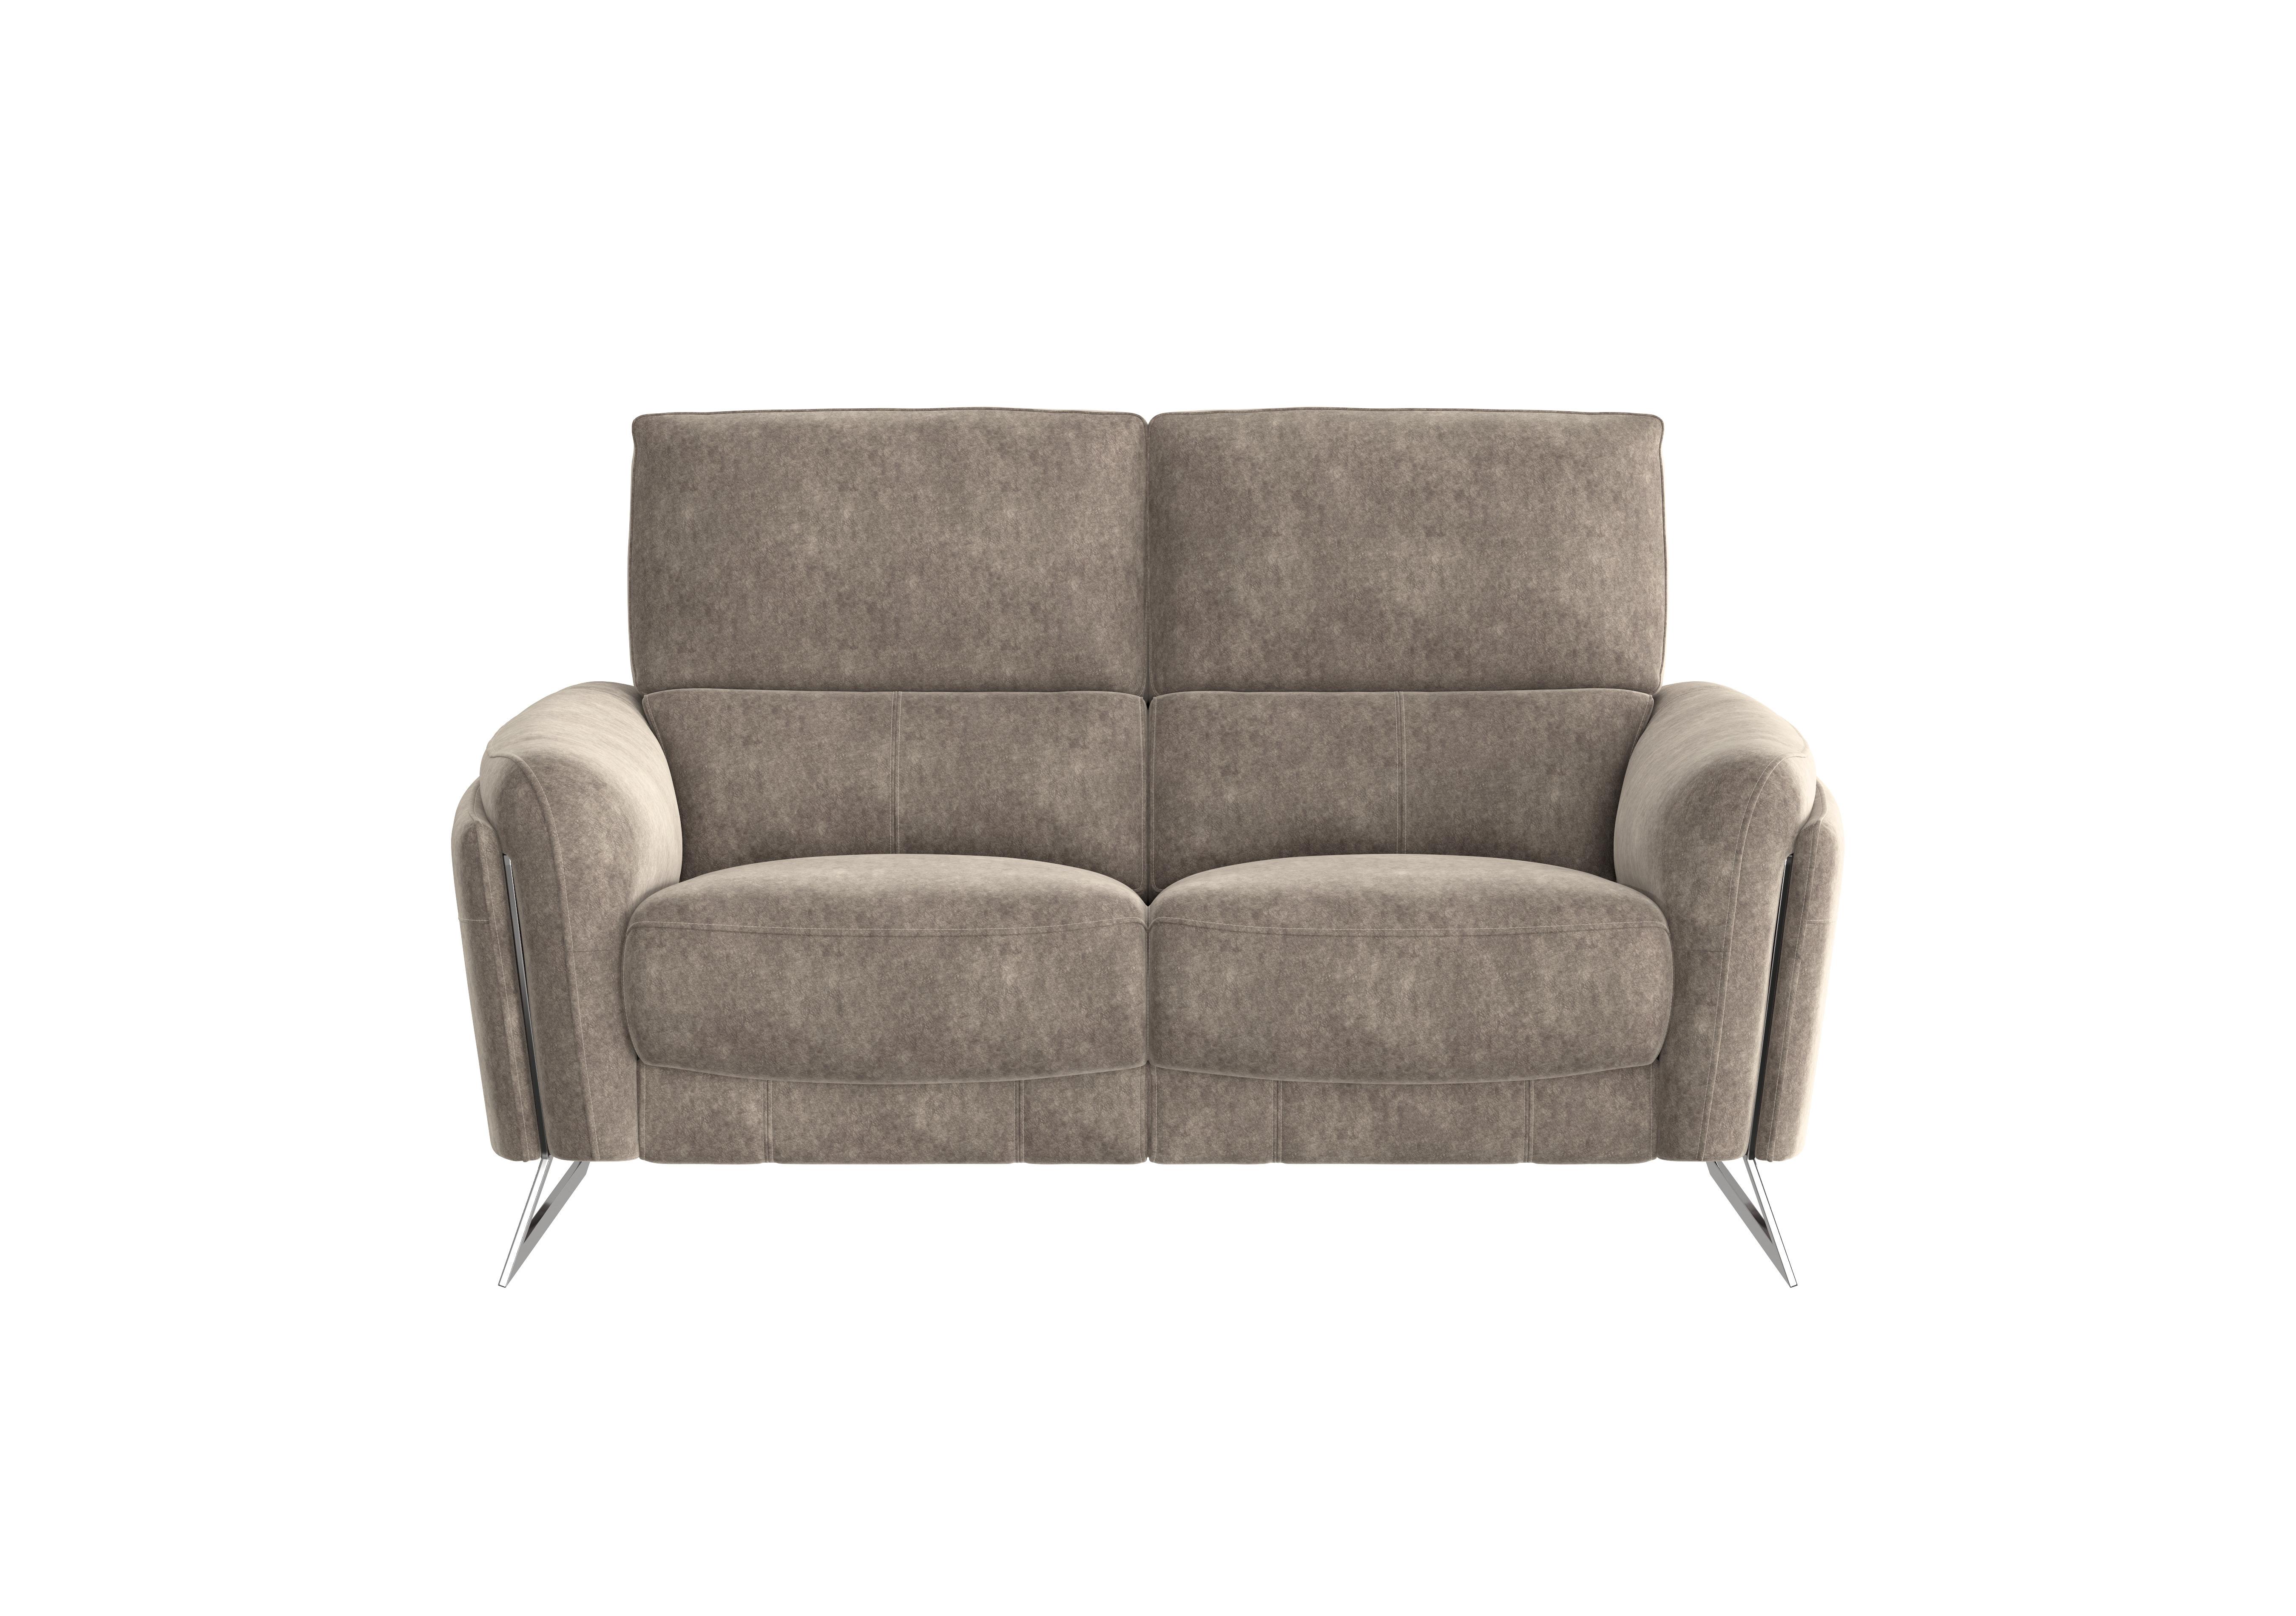 Amarilla 2 Seater Fabric Sofa in Bfa-Bnn-R29 Mink on Furniture Village